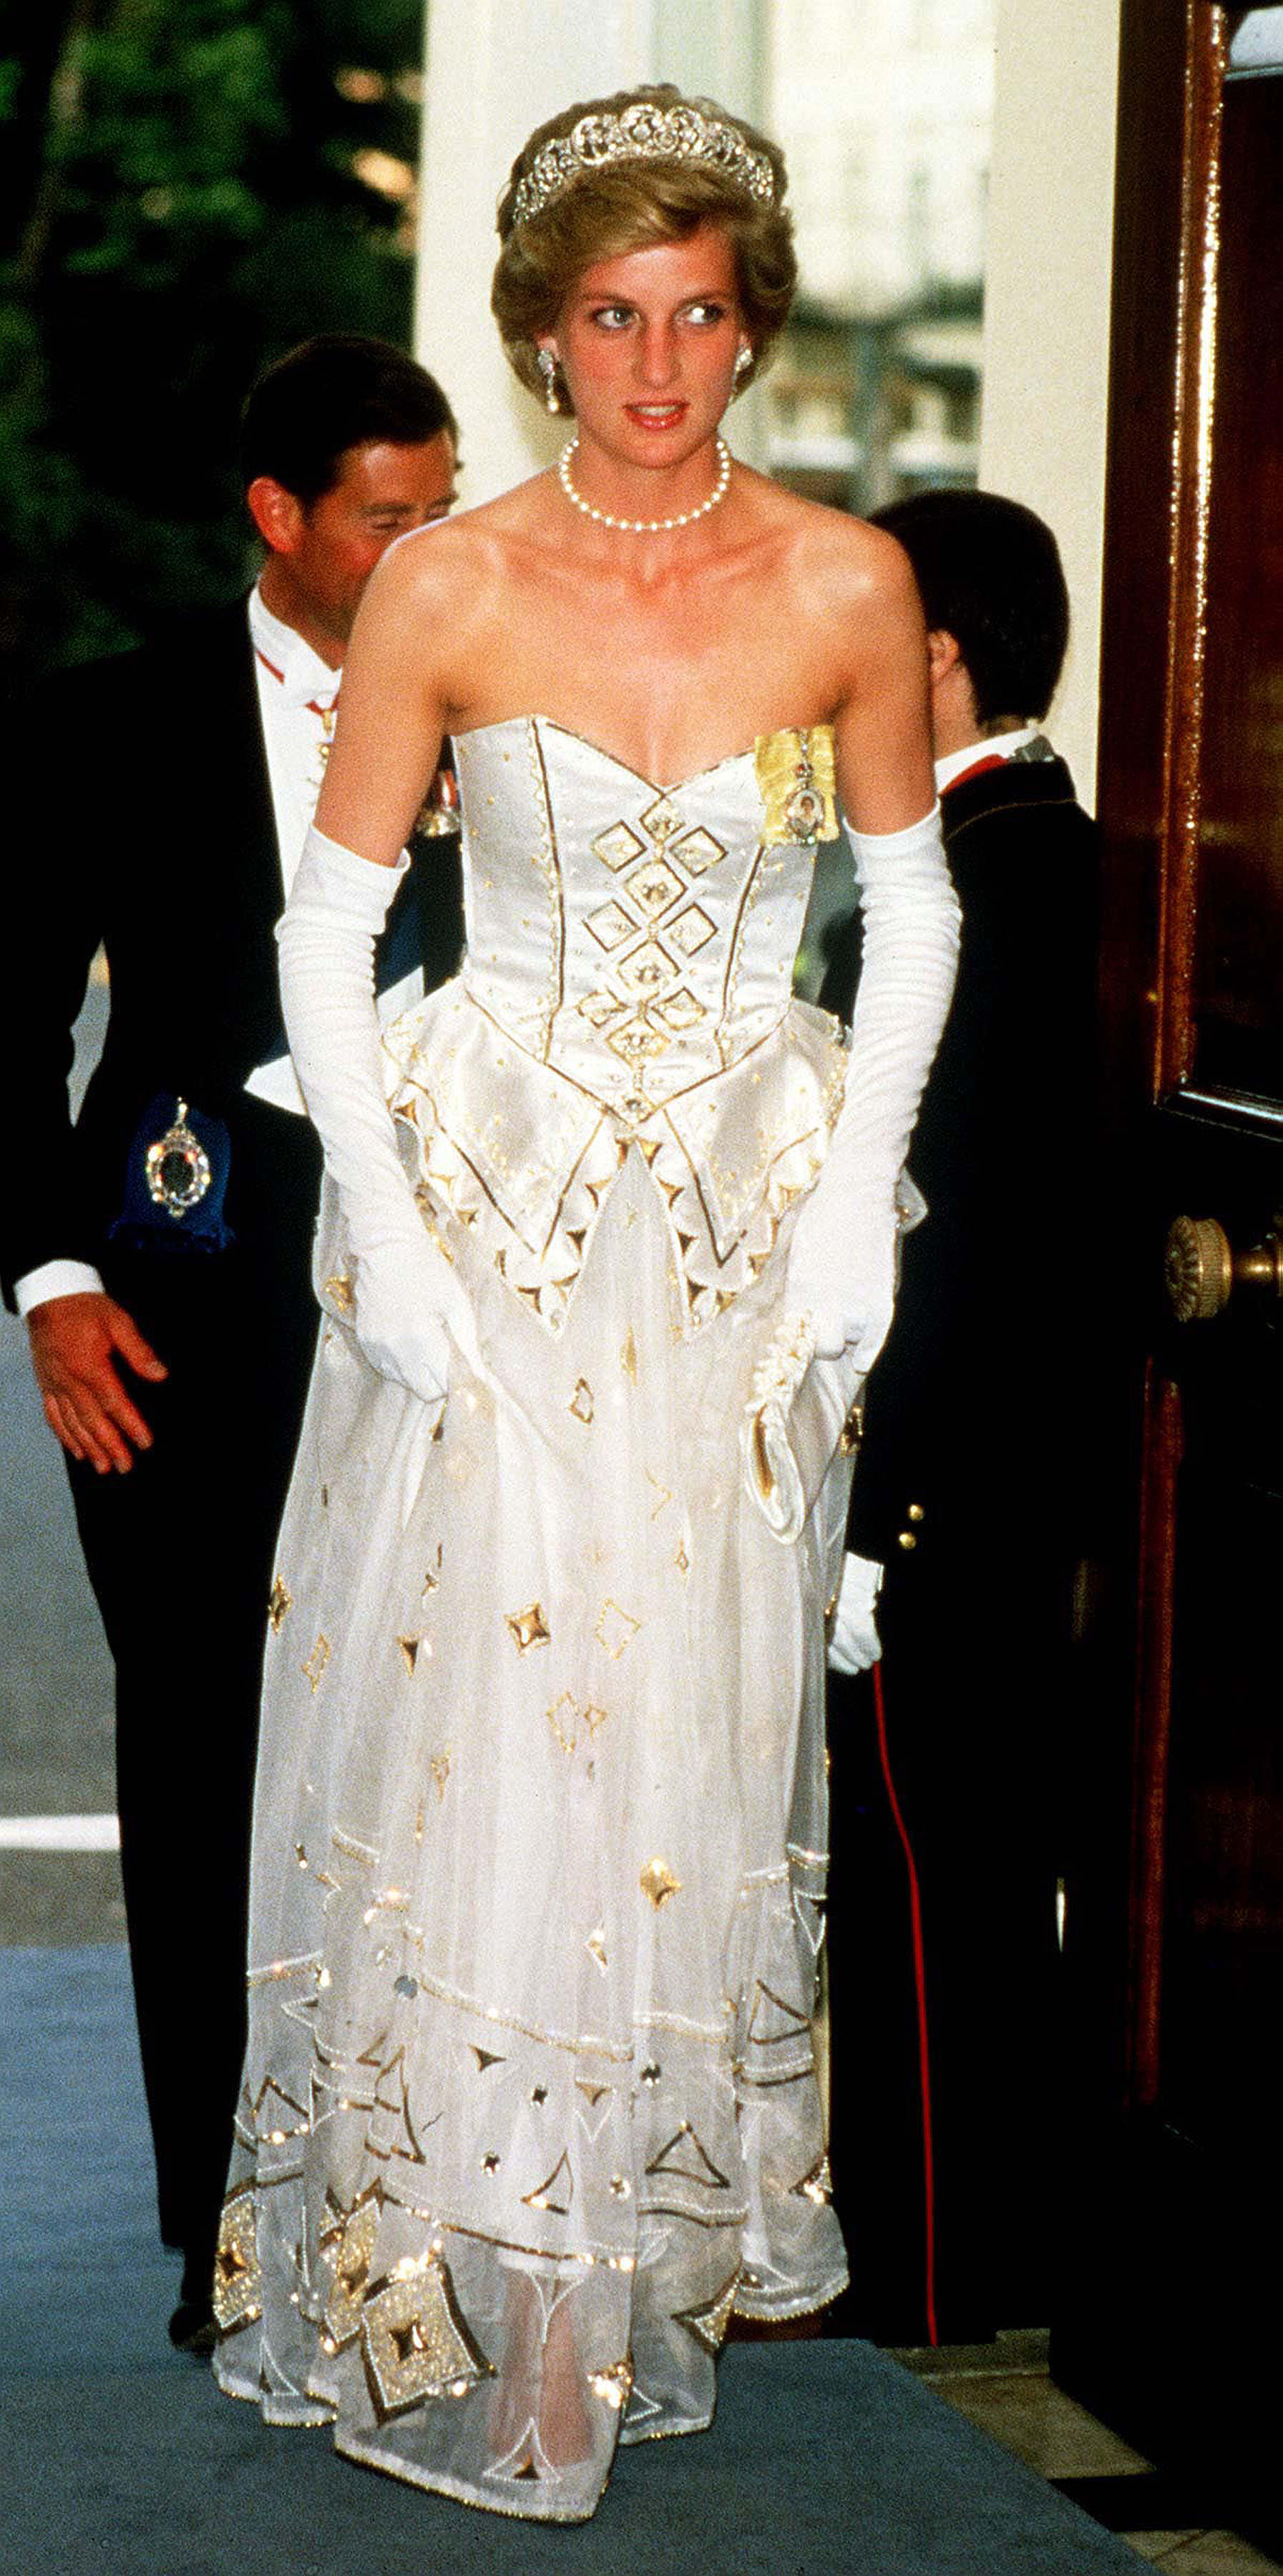 Princess Diana Dresses on Display